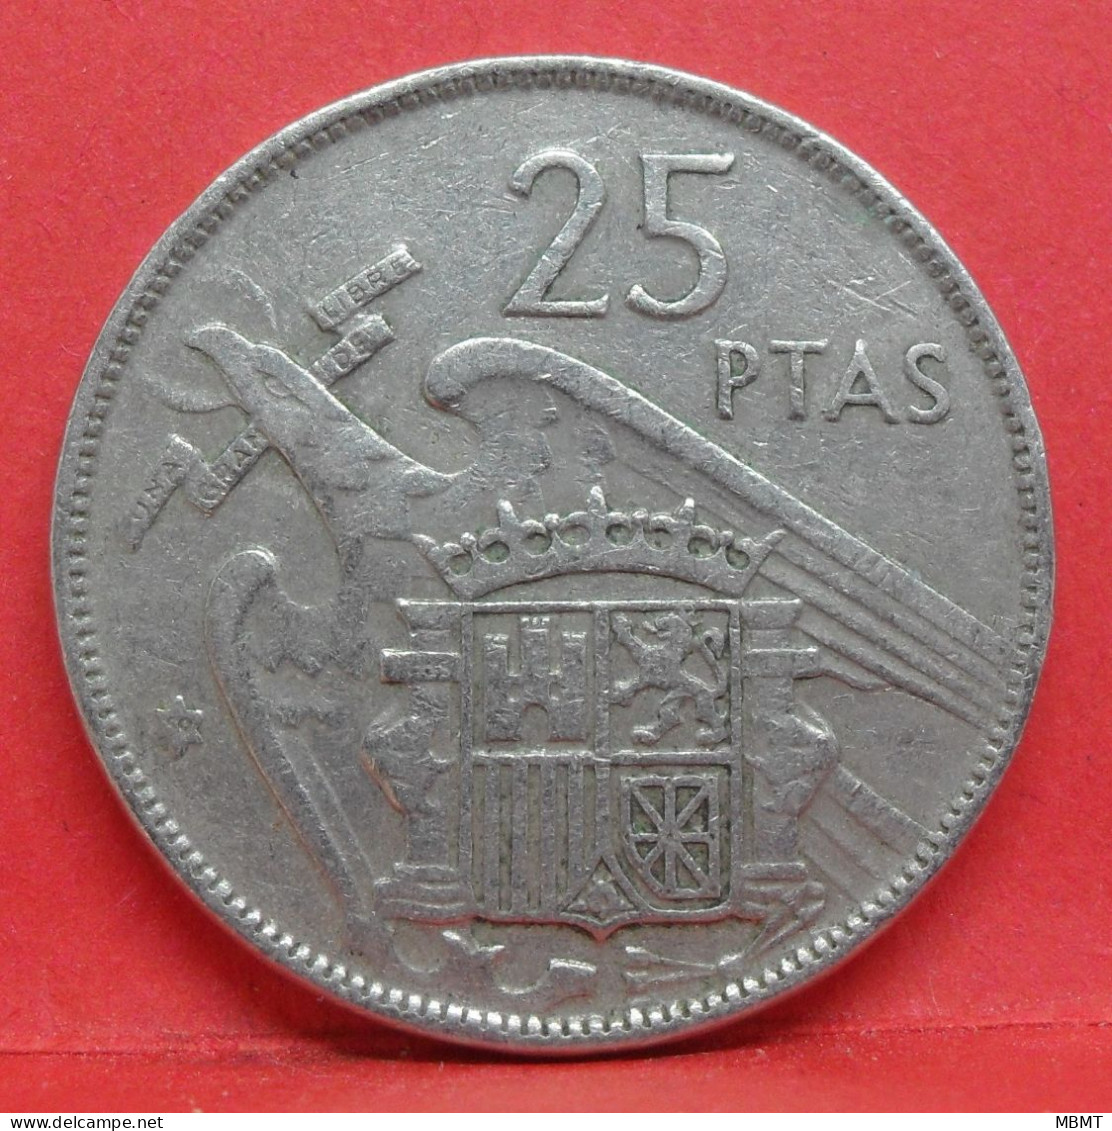 25 Pesetas 1957 étoile 59 - TB - Pièce Monnaie Espagne - Article N°2429 - 25 Pesetas